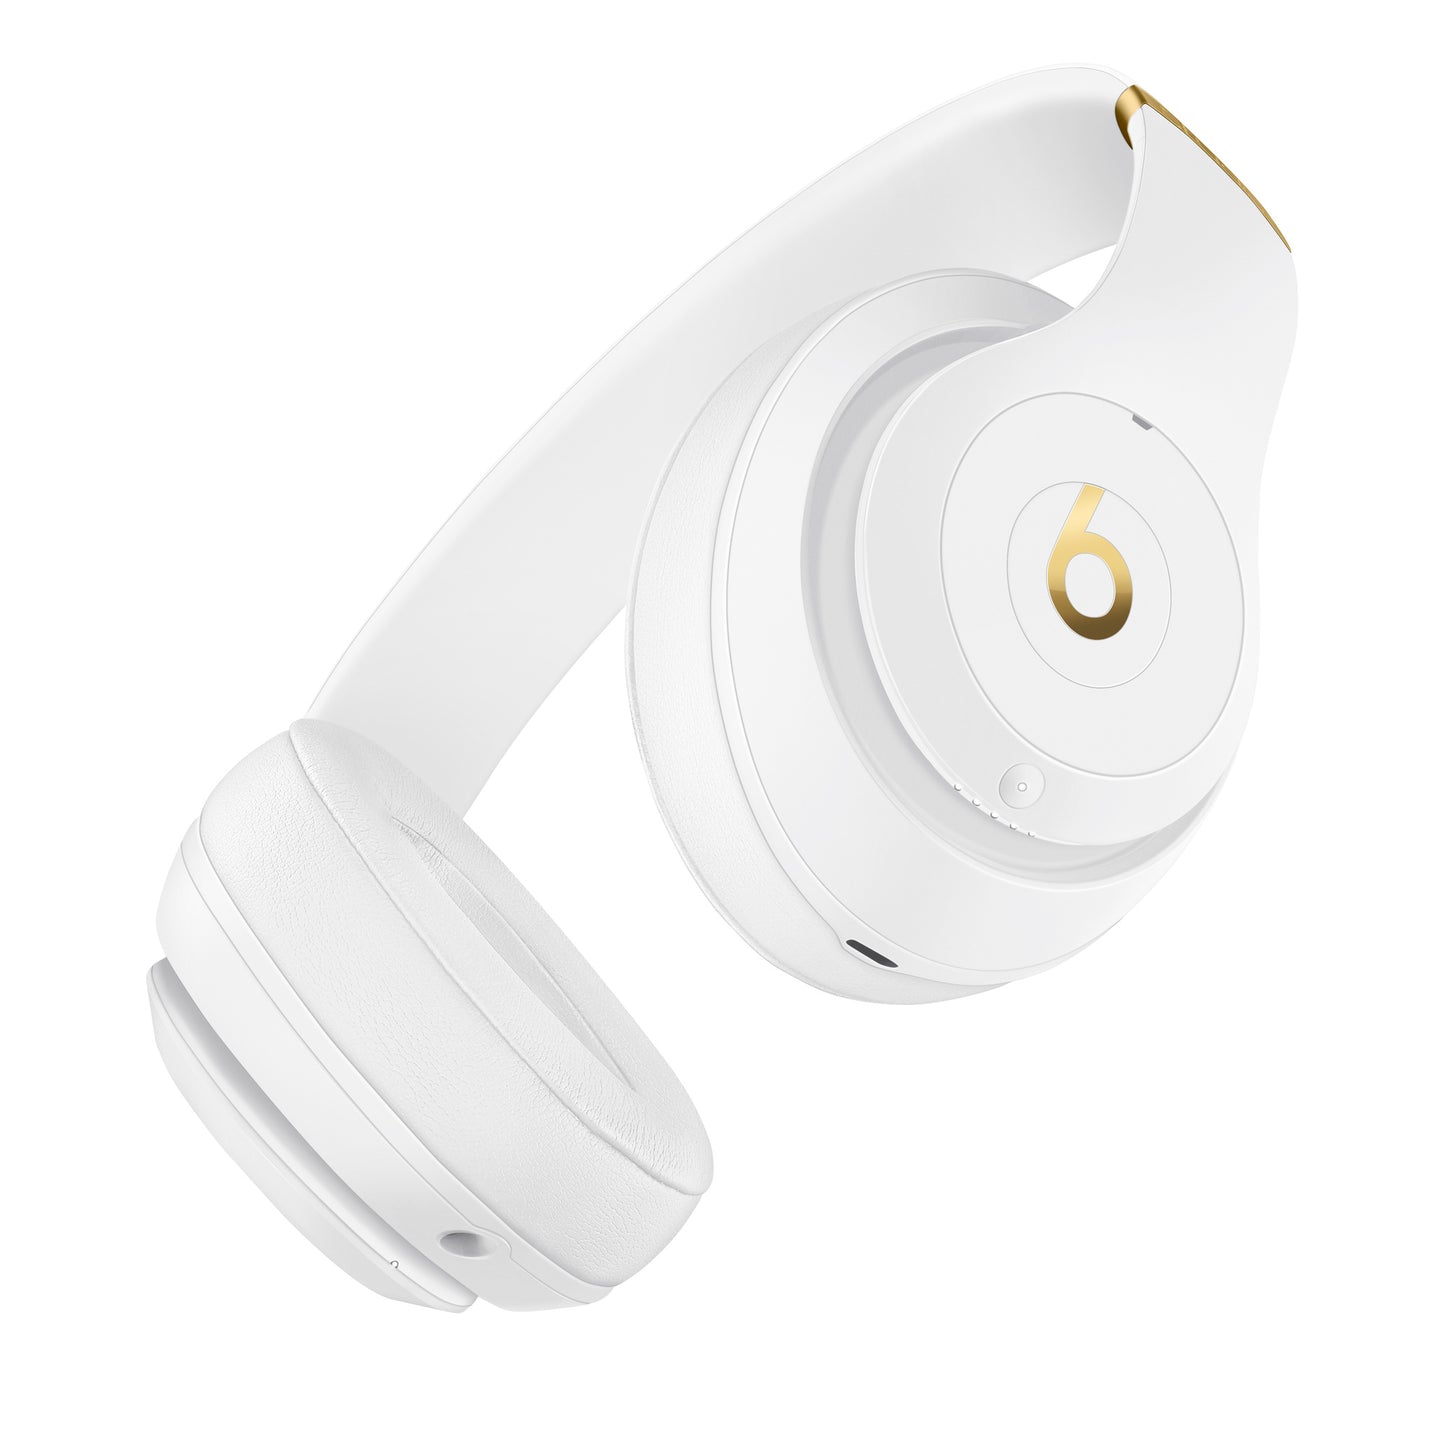 Beats Studio3 Wireless Over_Ear Headphones - White